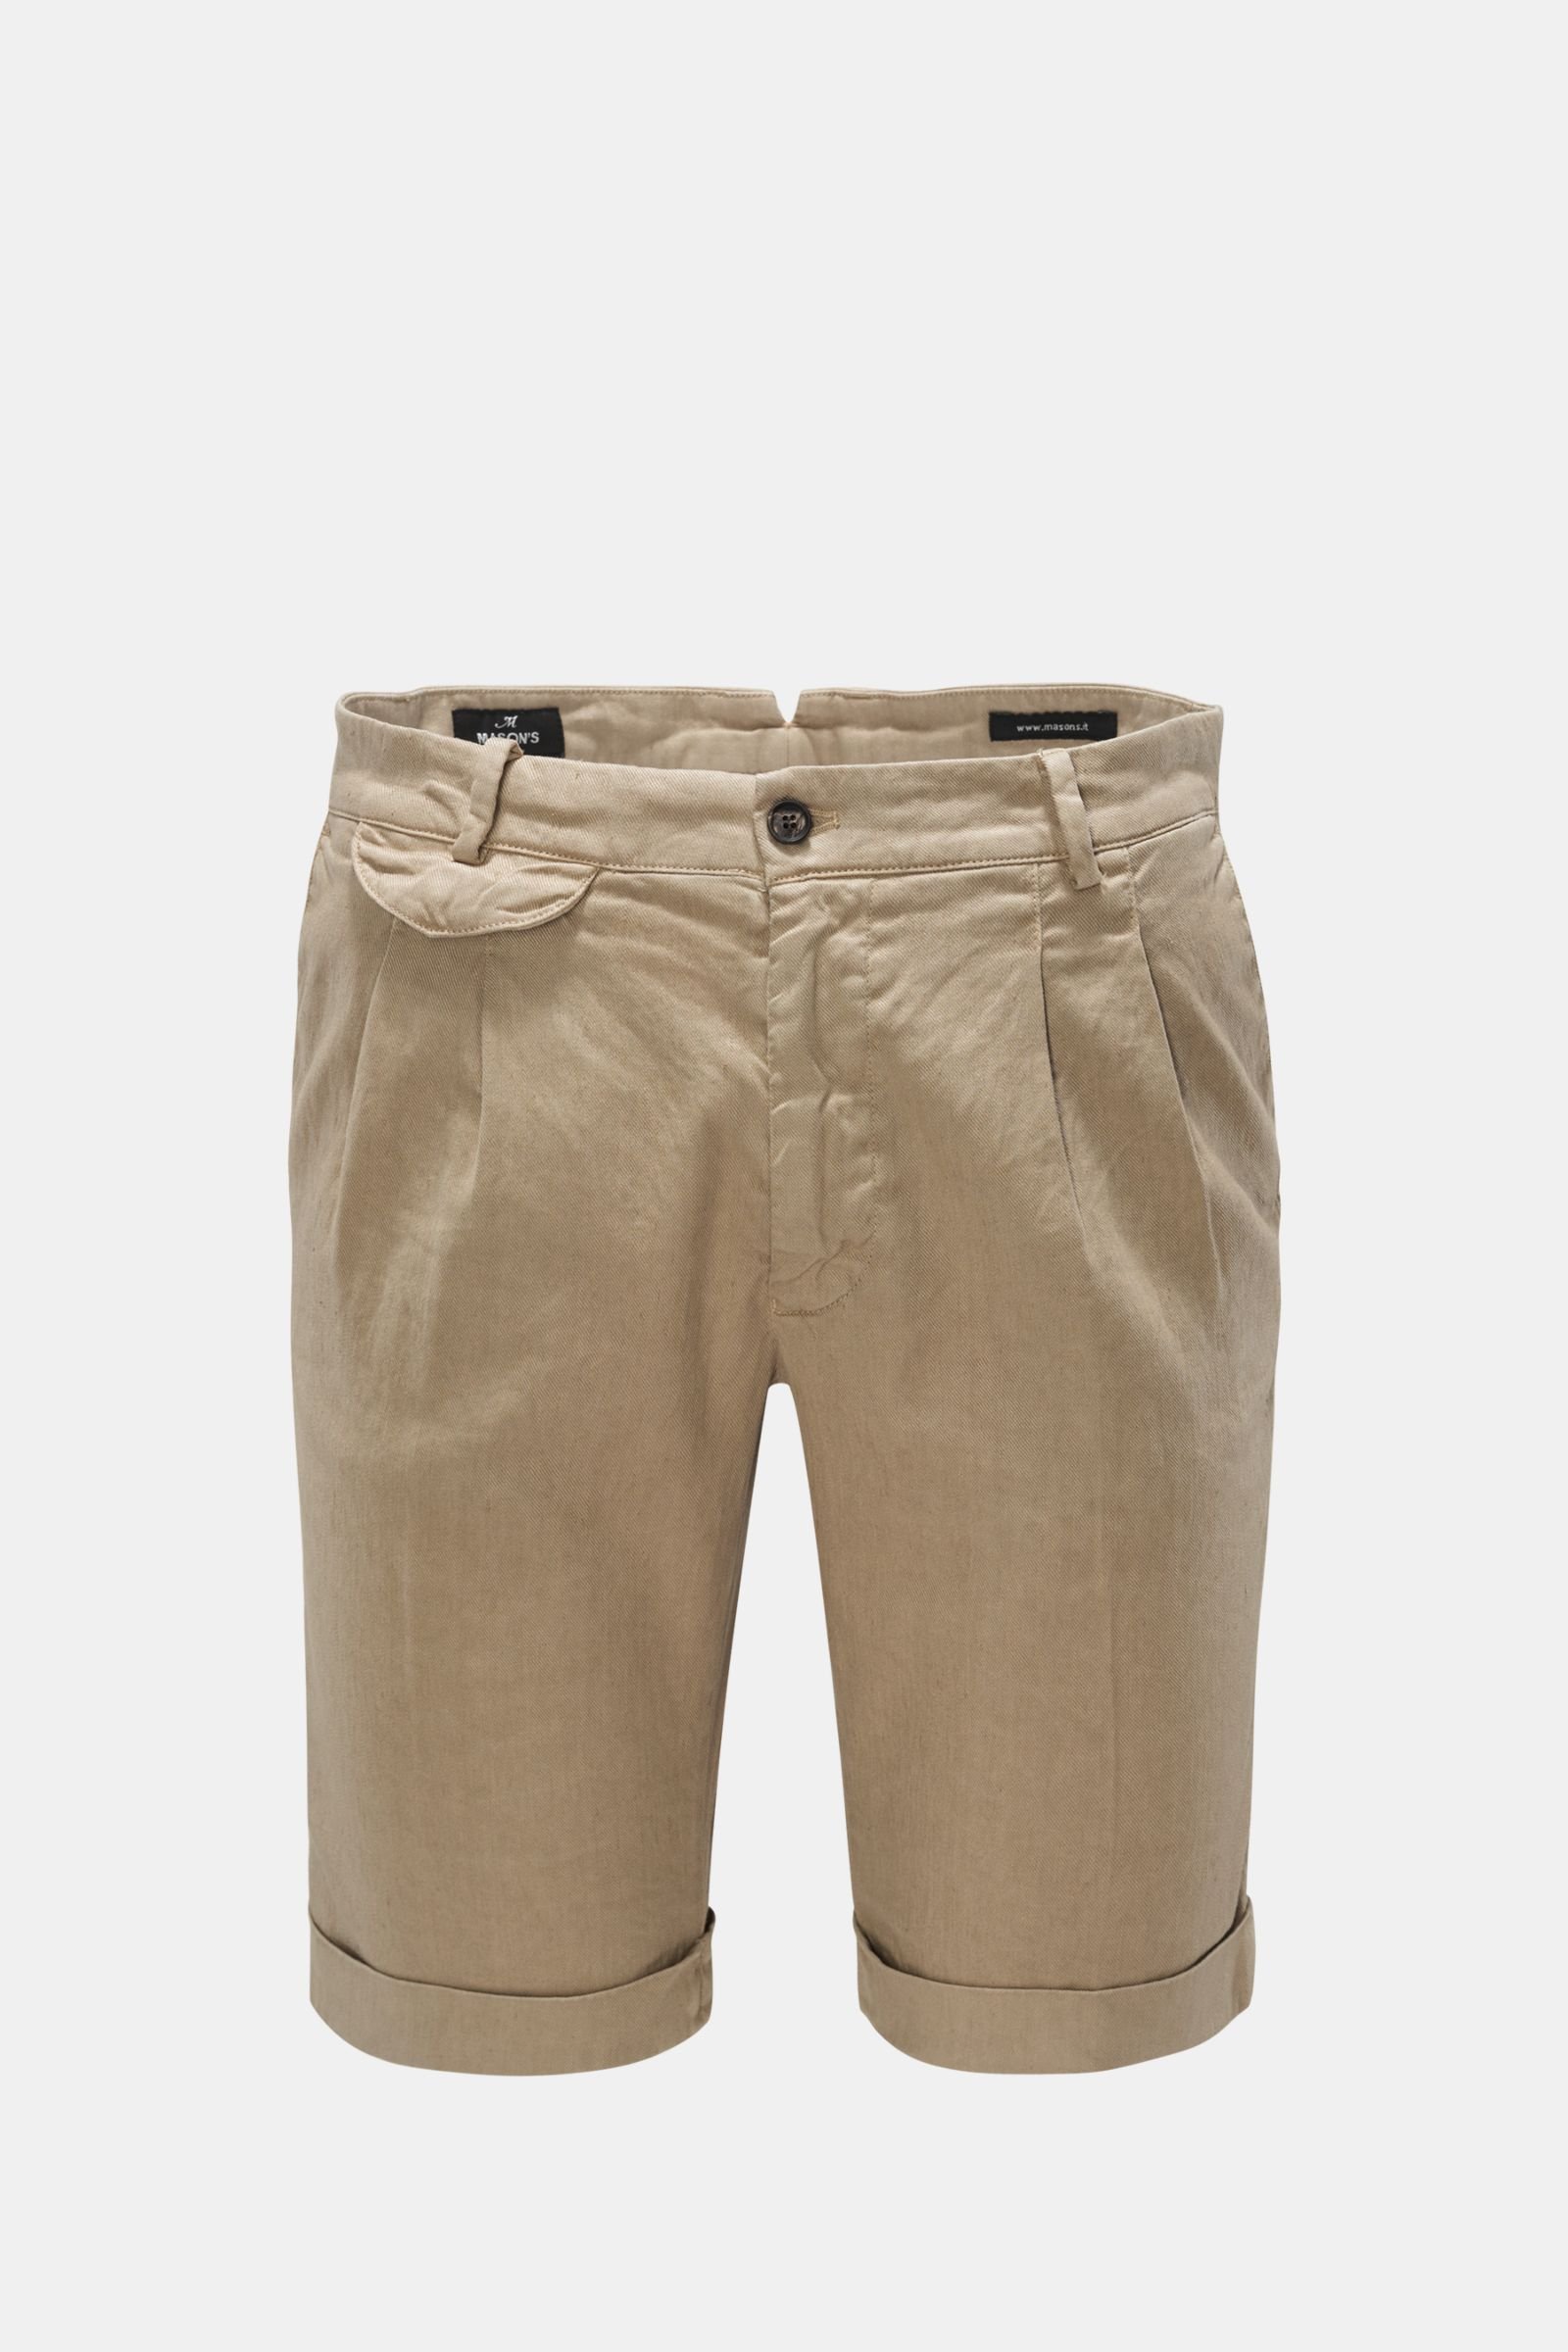 Dickies Men's 11 Inch Lightweight Carpenter Short, Brown Duck, 30 at Amazon  Men's Clothing store